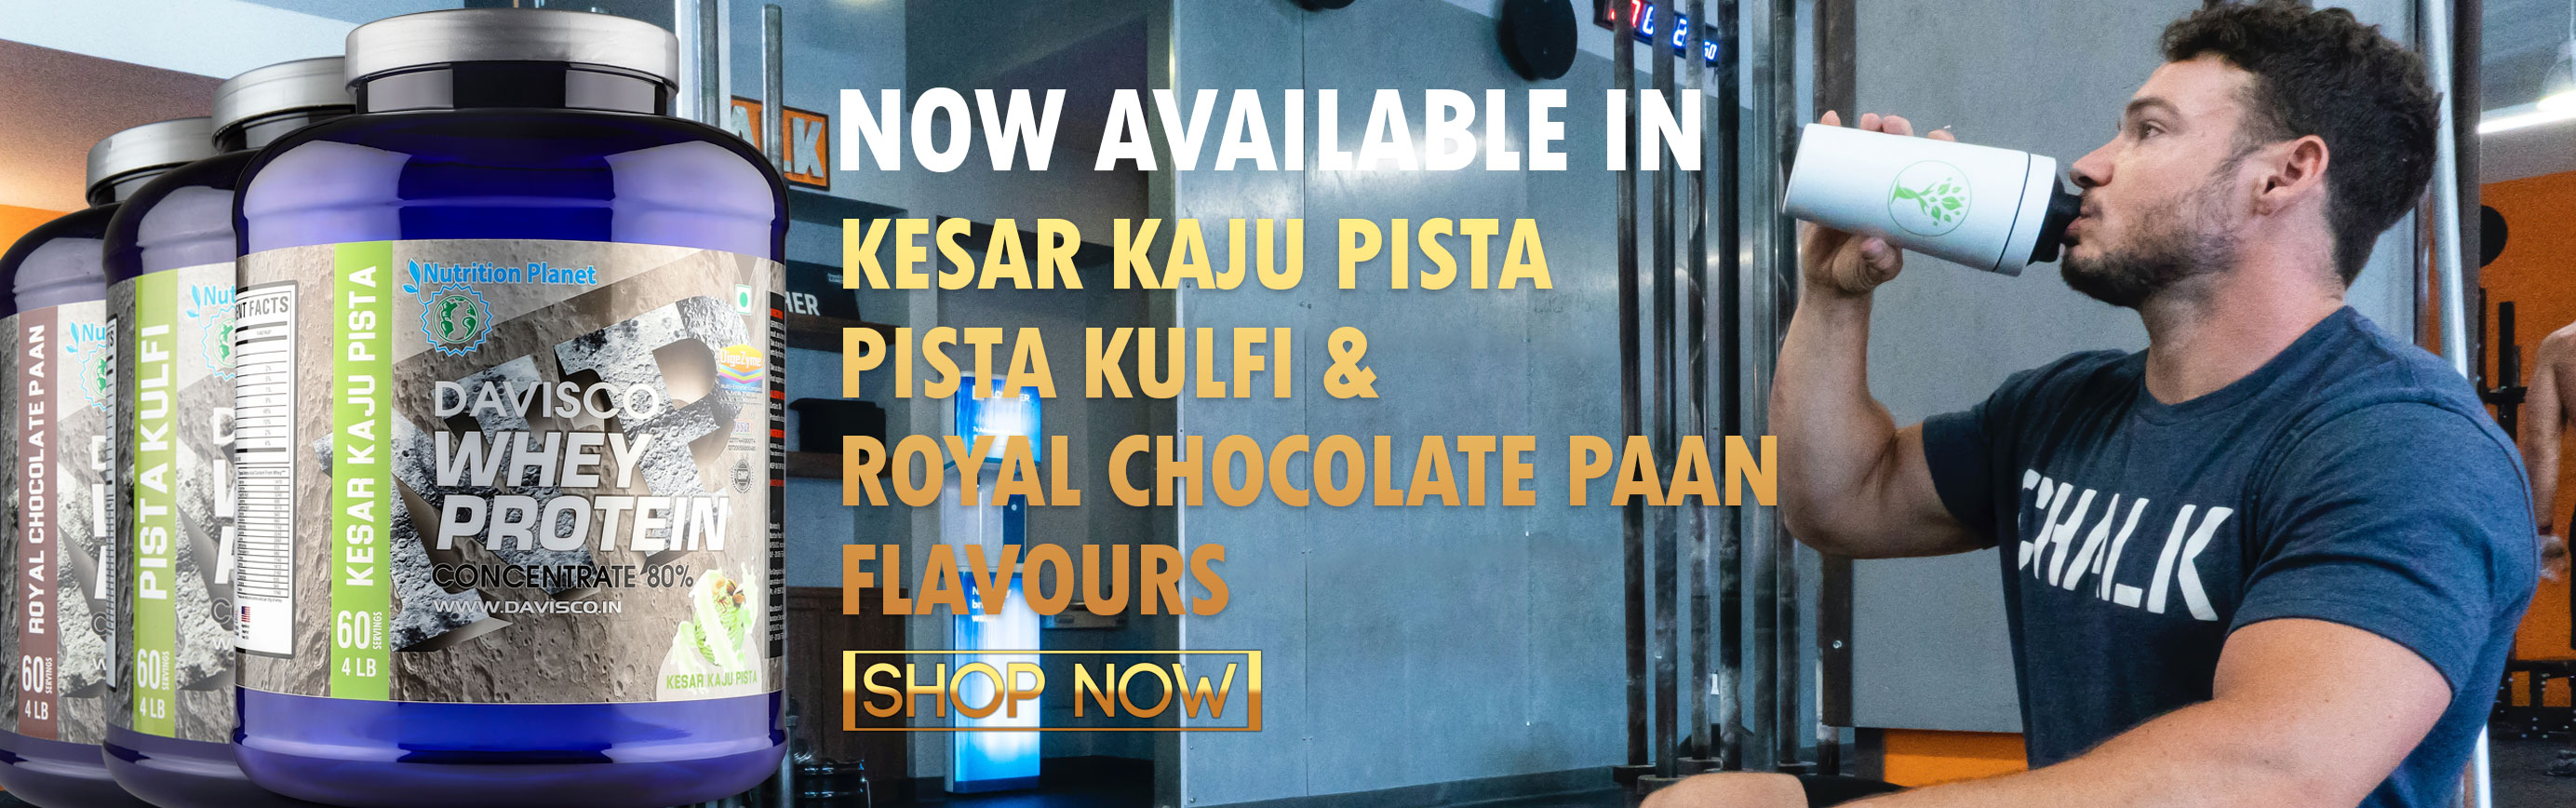 Davisco Whey Protein Pista Kulfi, Kesar Kaju Pista and Royal Chocolate Paan